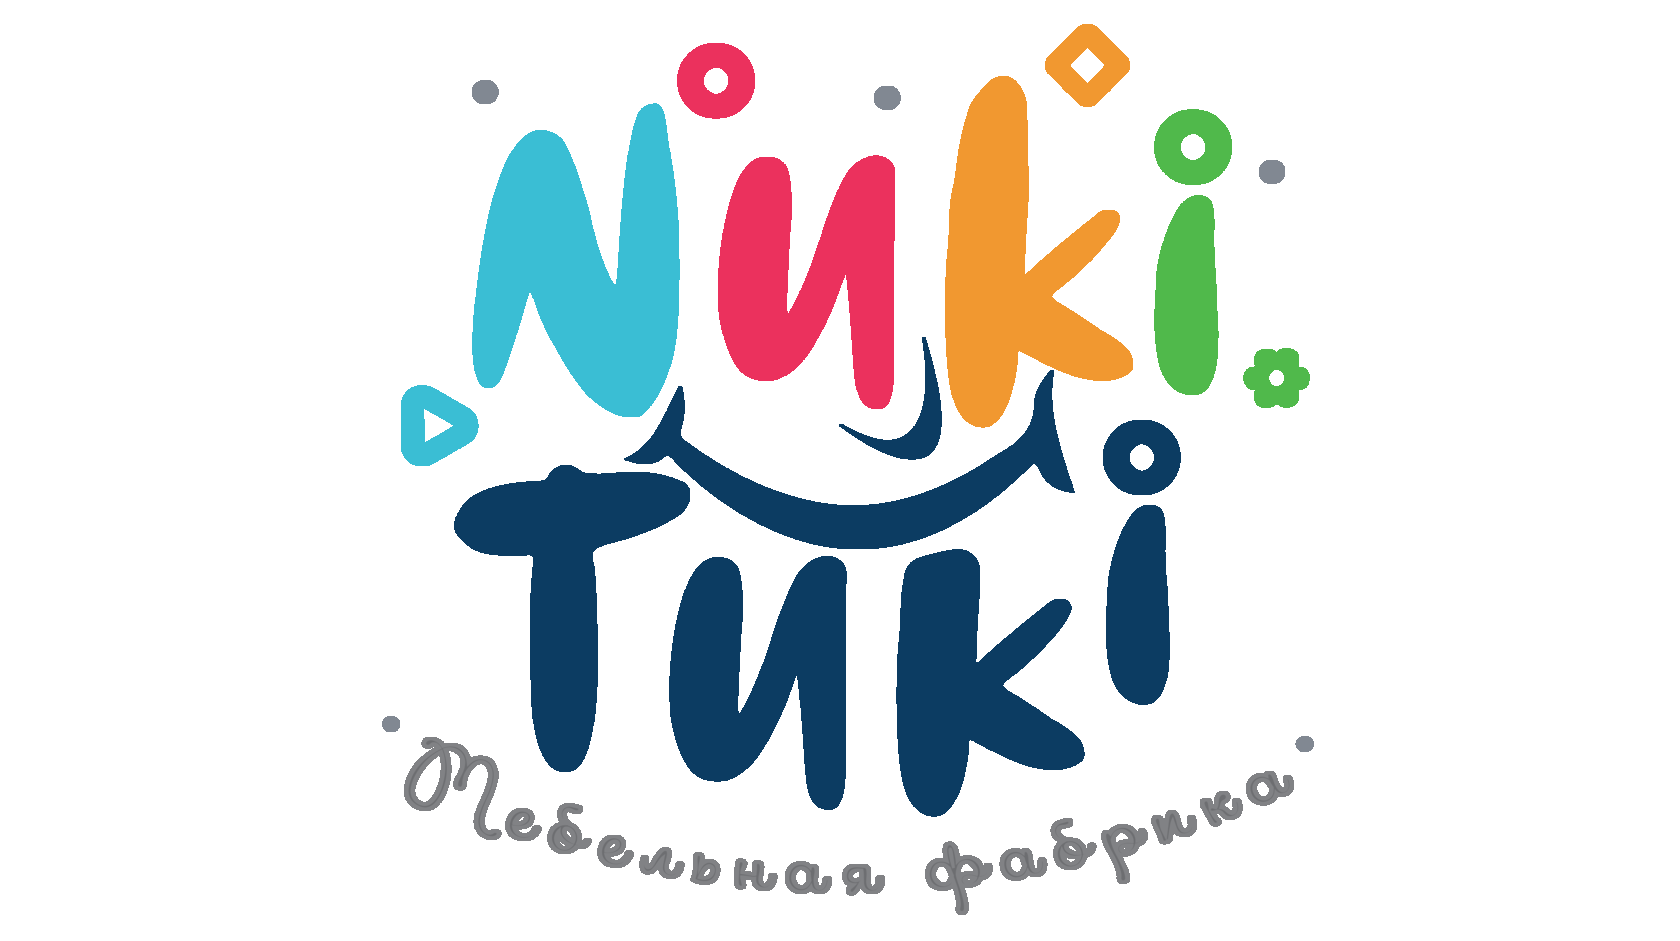 Nuki-Tuki